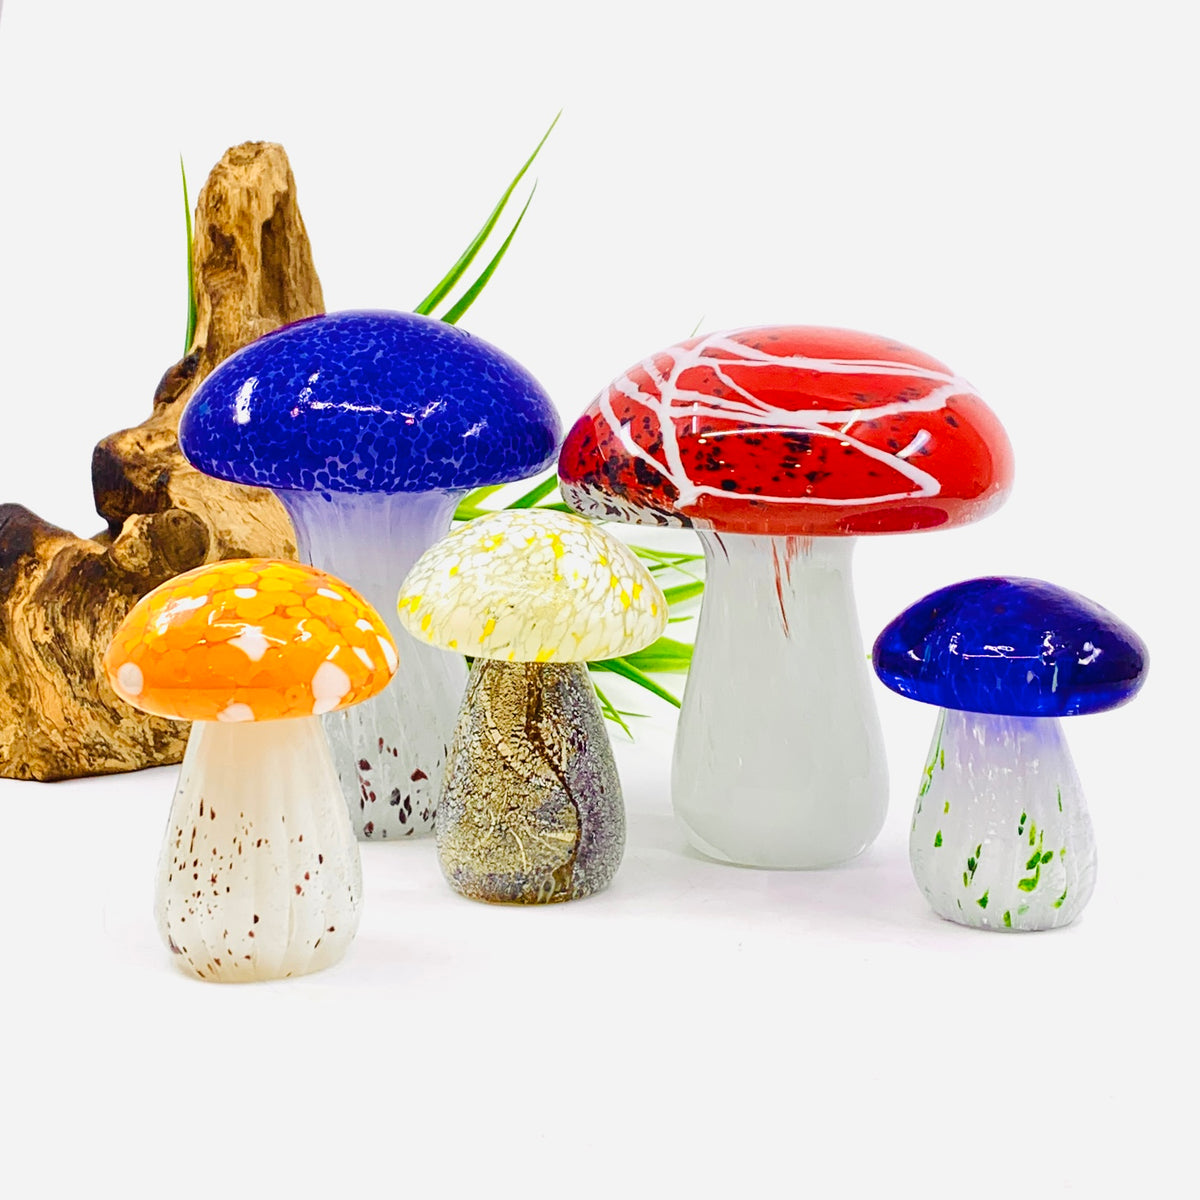 Small Glass Mushroom, Orange Cap